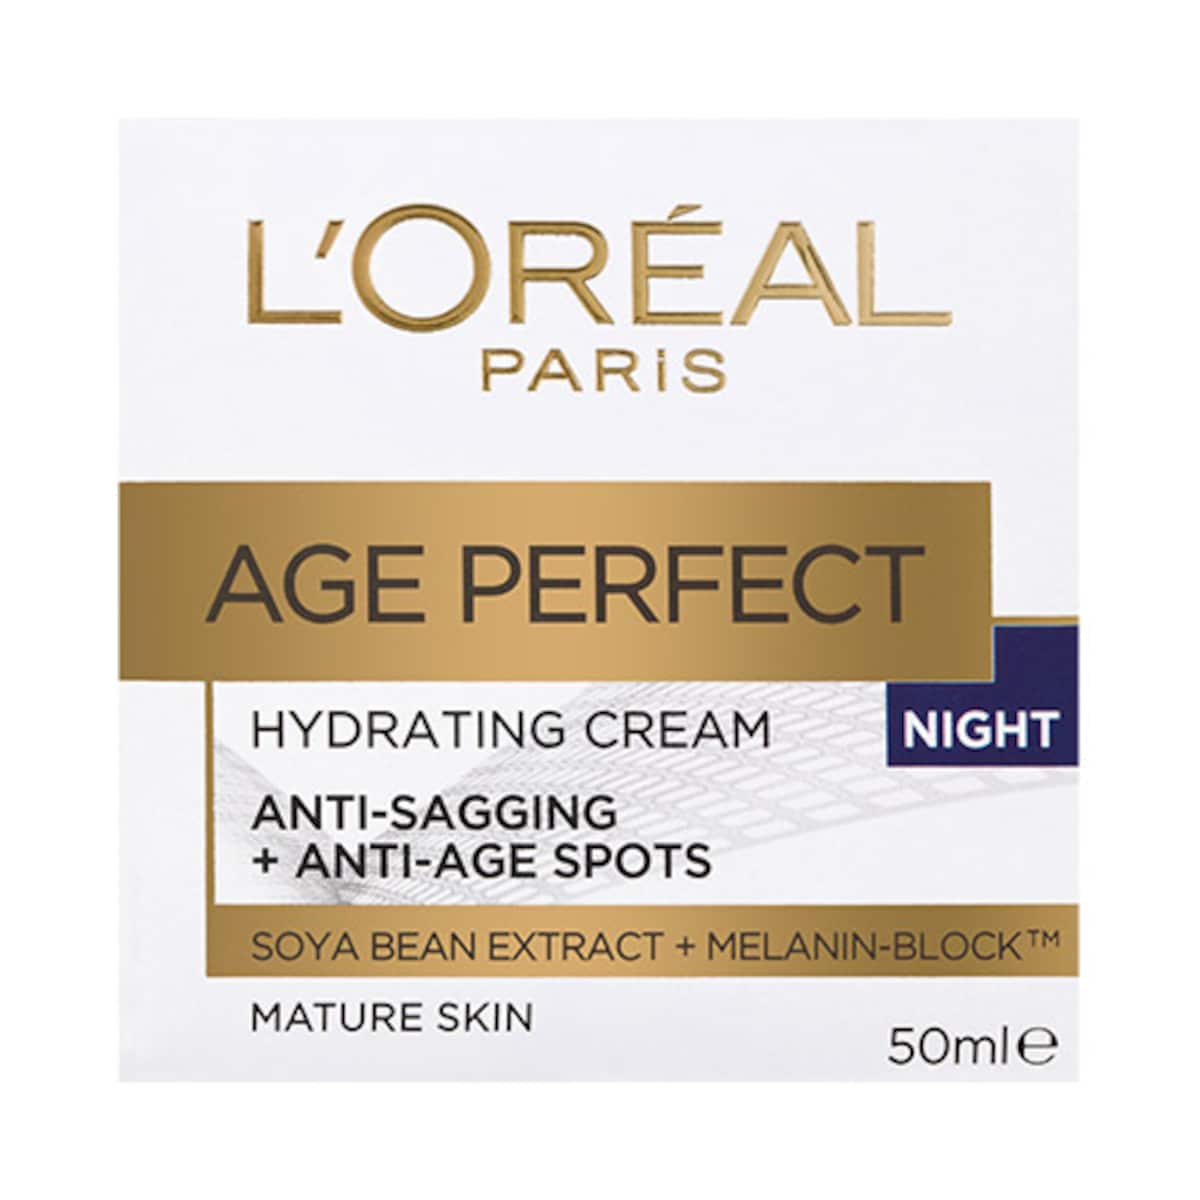 L'Oreal Age Perfect Hydrating Night Cream 50ml